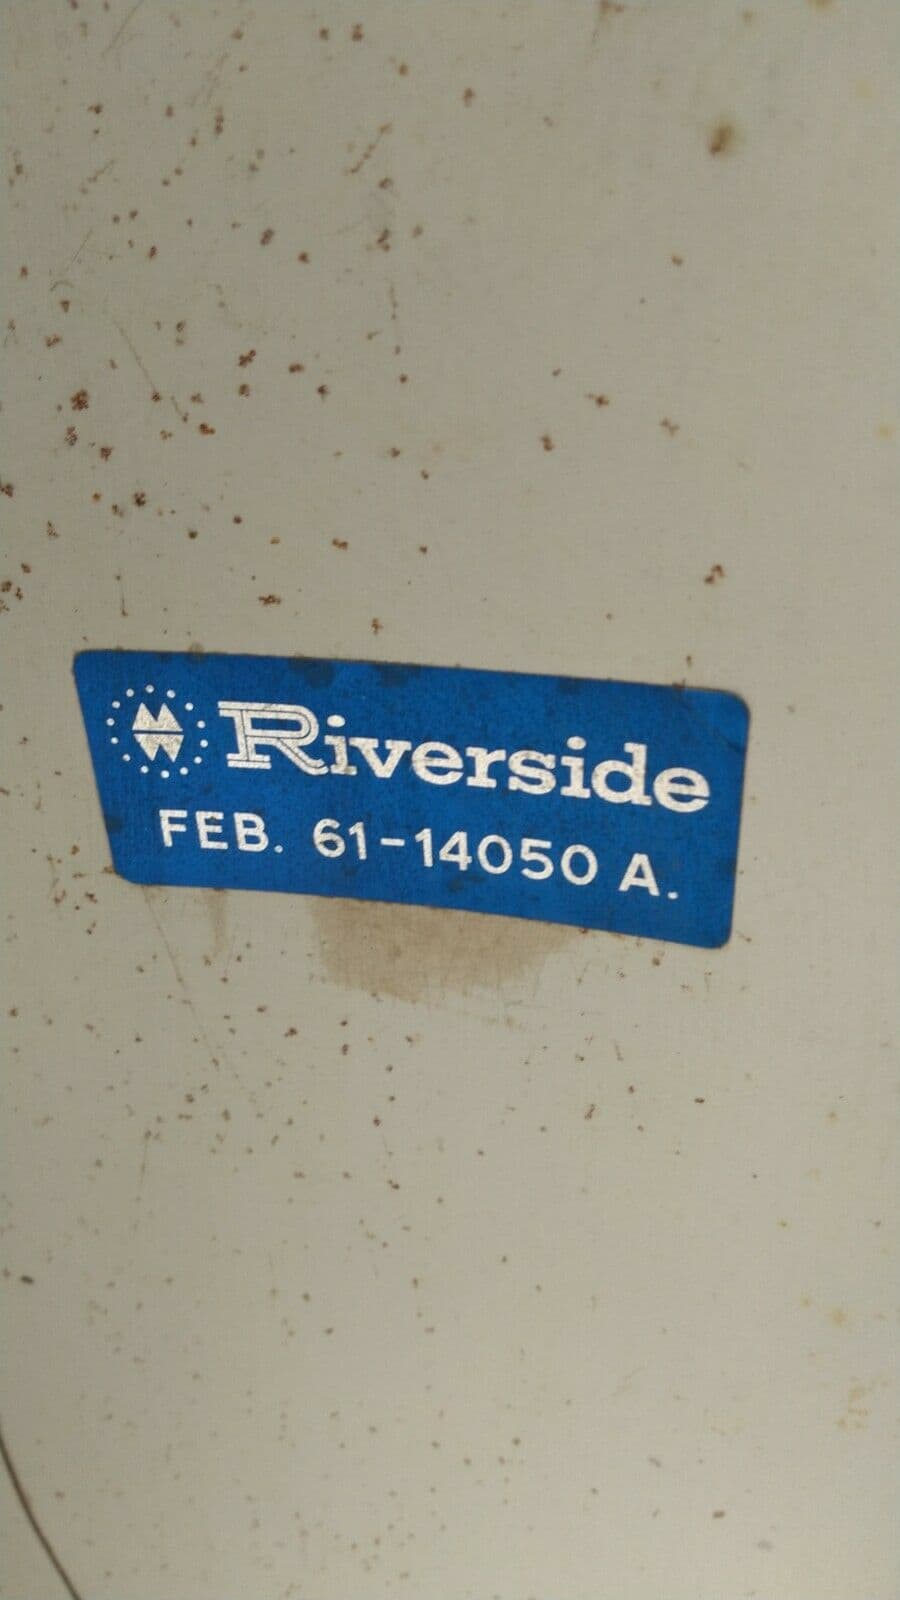 feb-14050a Riverside Bianchi